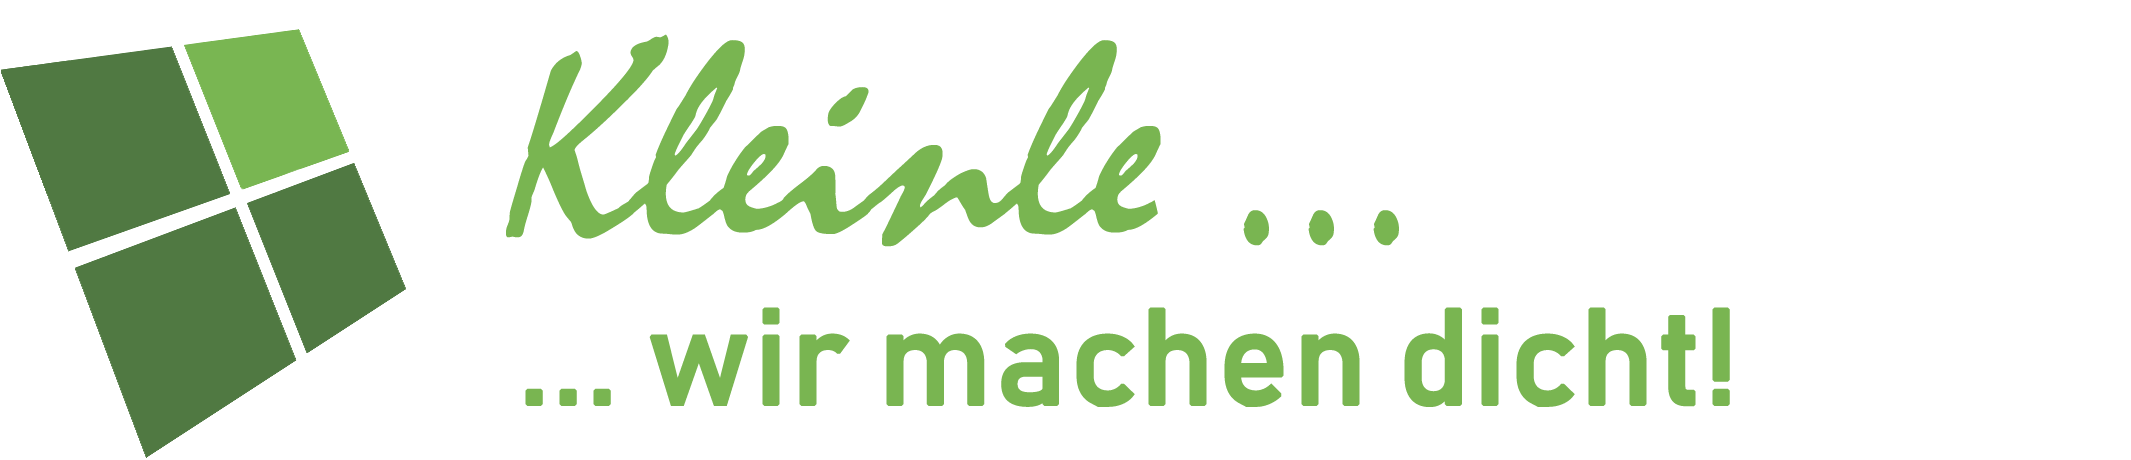 Dichtstoffhandel Kleinle-Logo